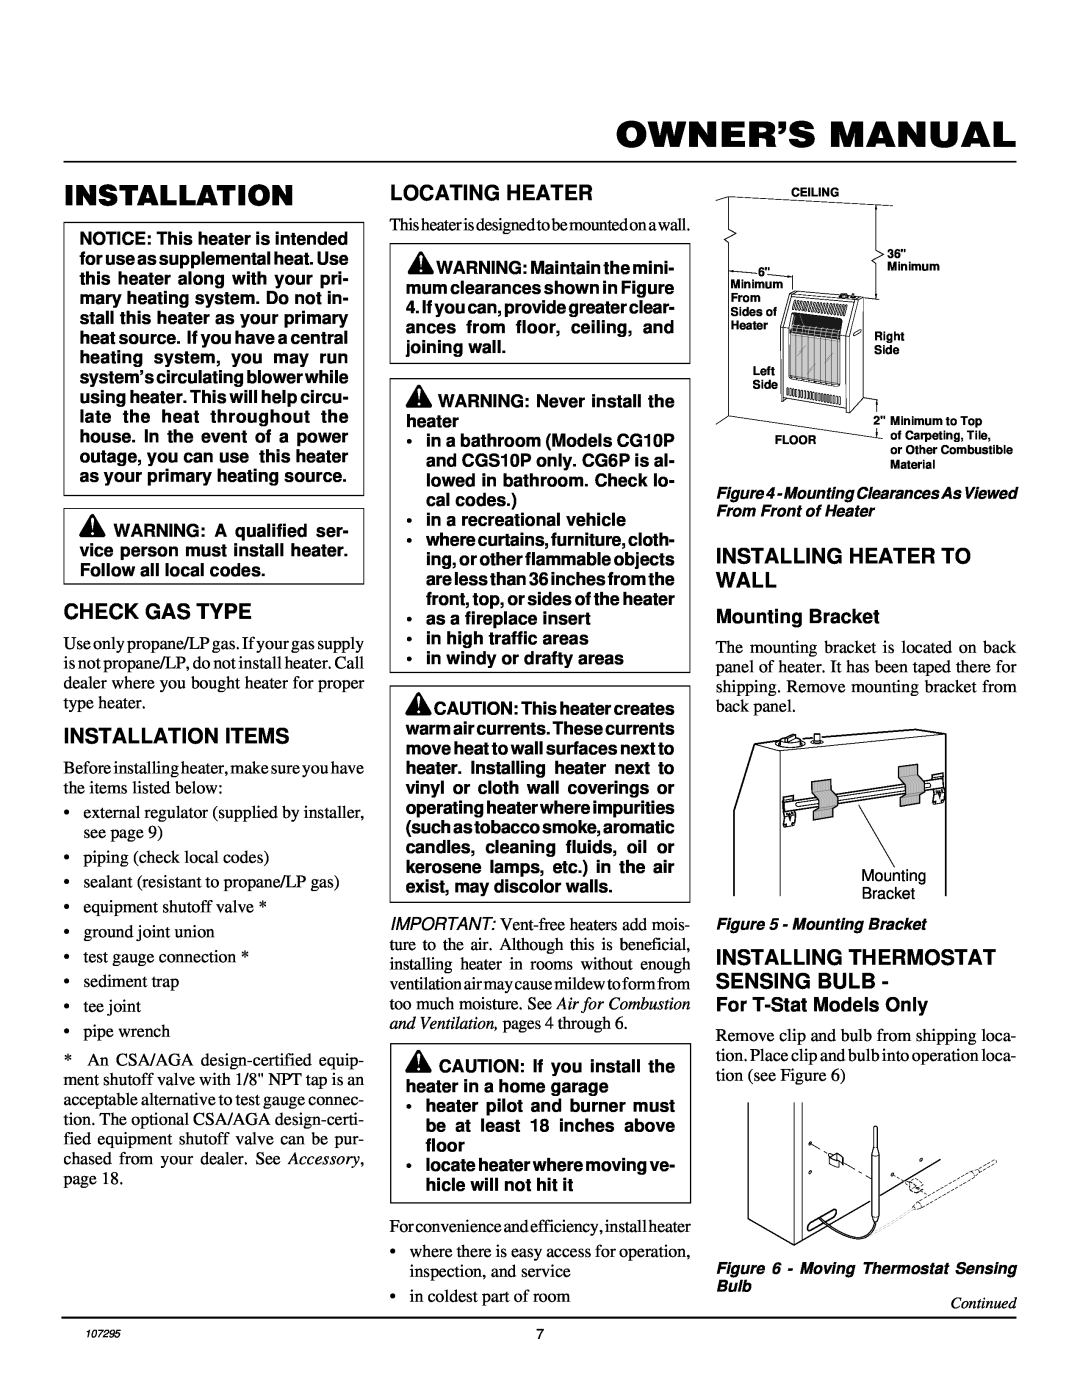 Desa CG6P, CGS10P, CG10P Locating Heater, Check Gas Type, Installation Items, Installing Heater To Wall 